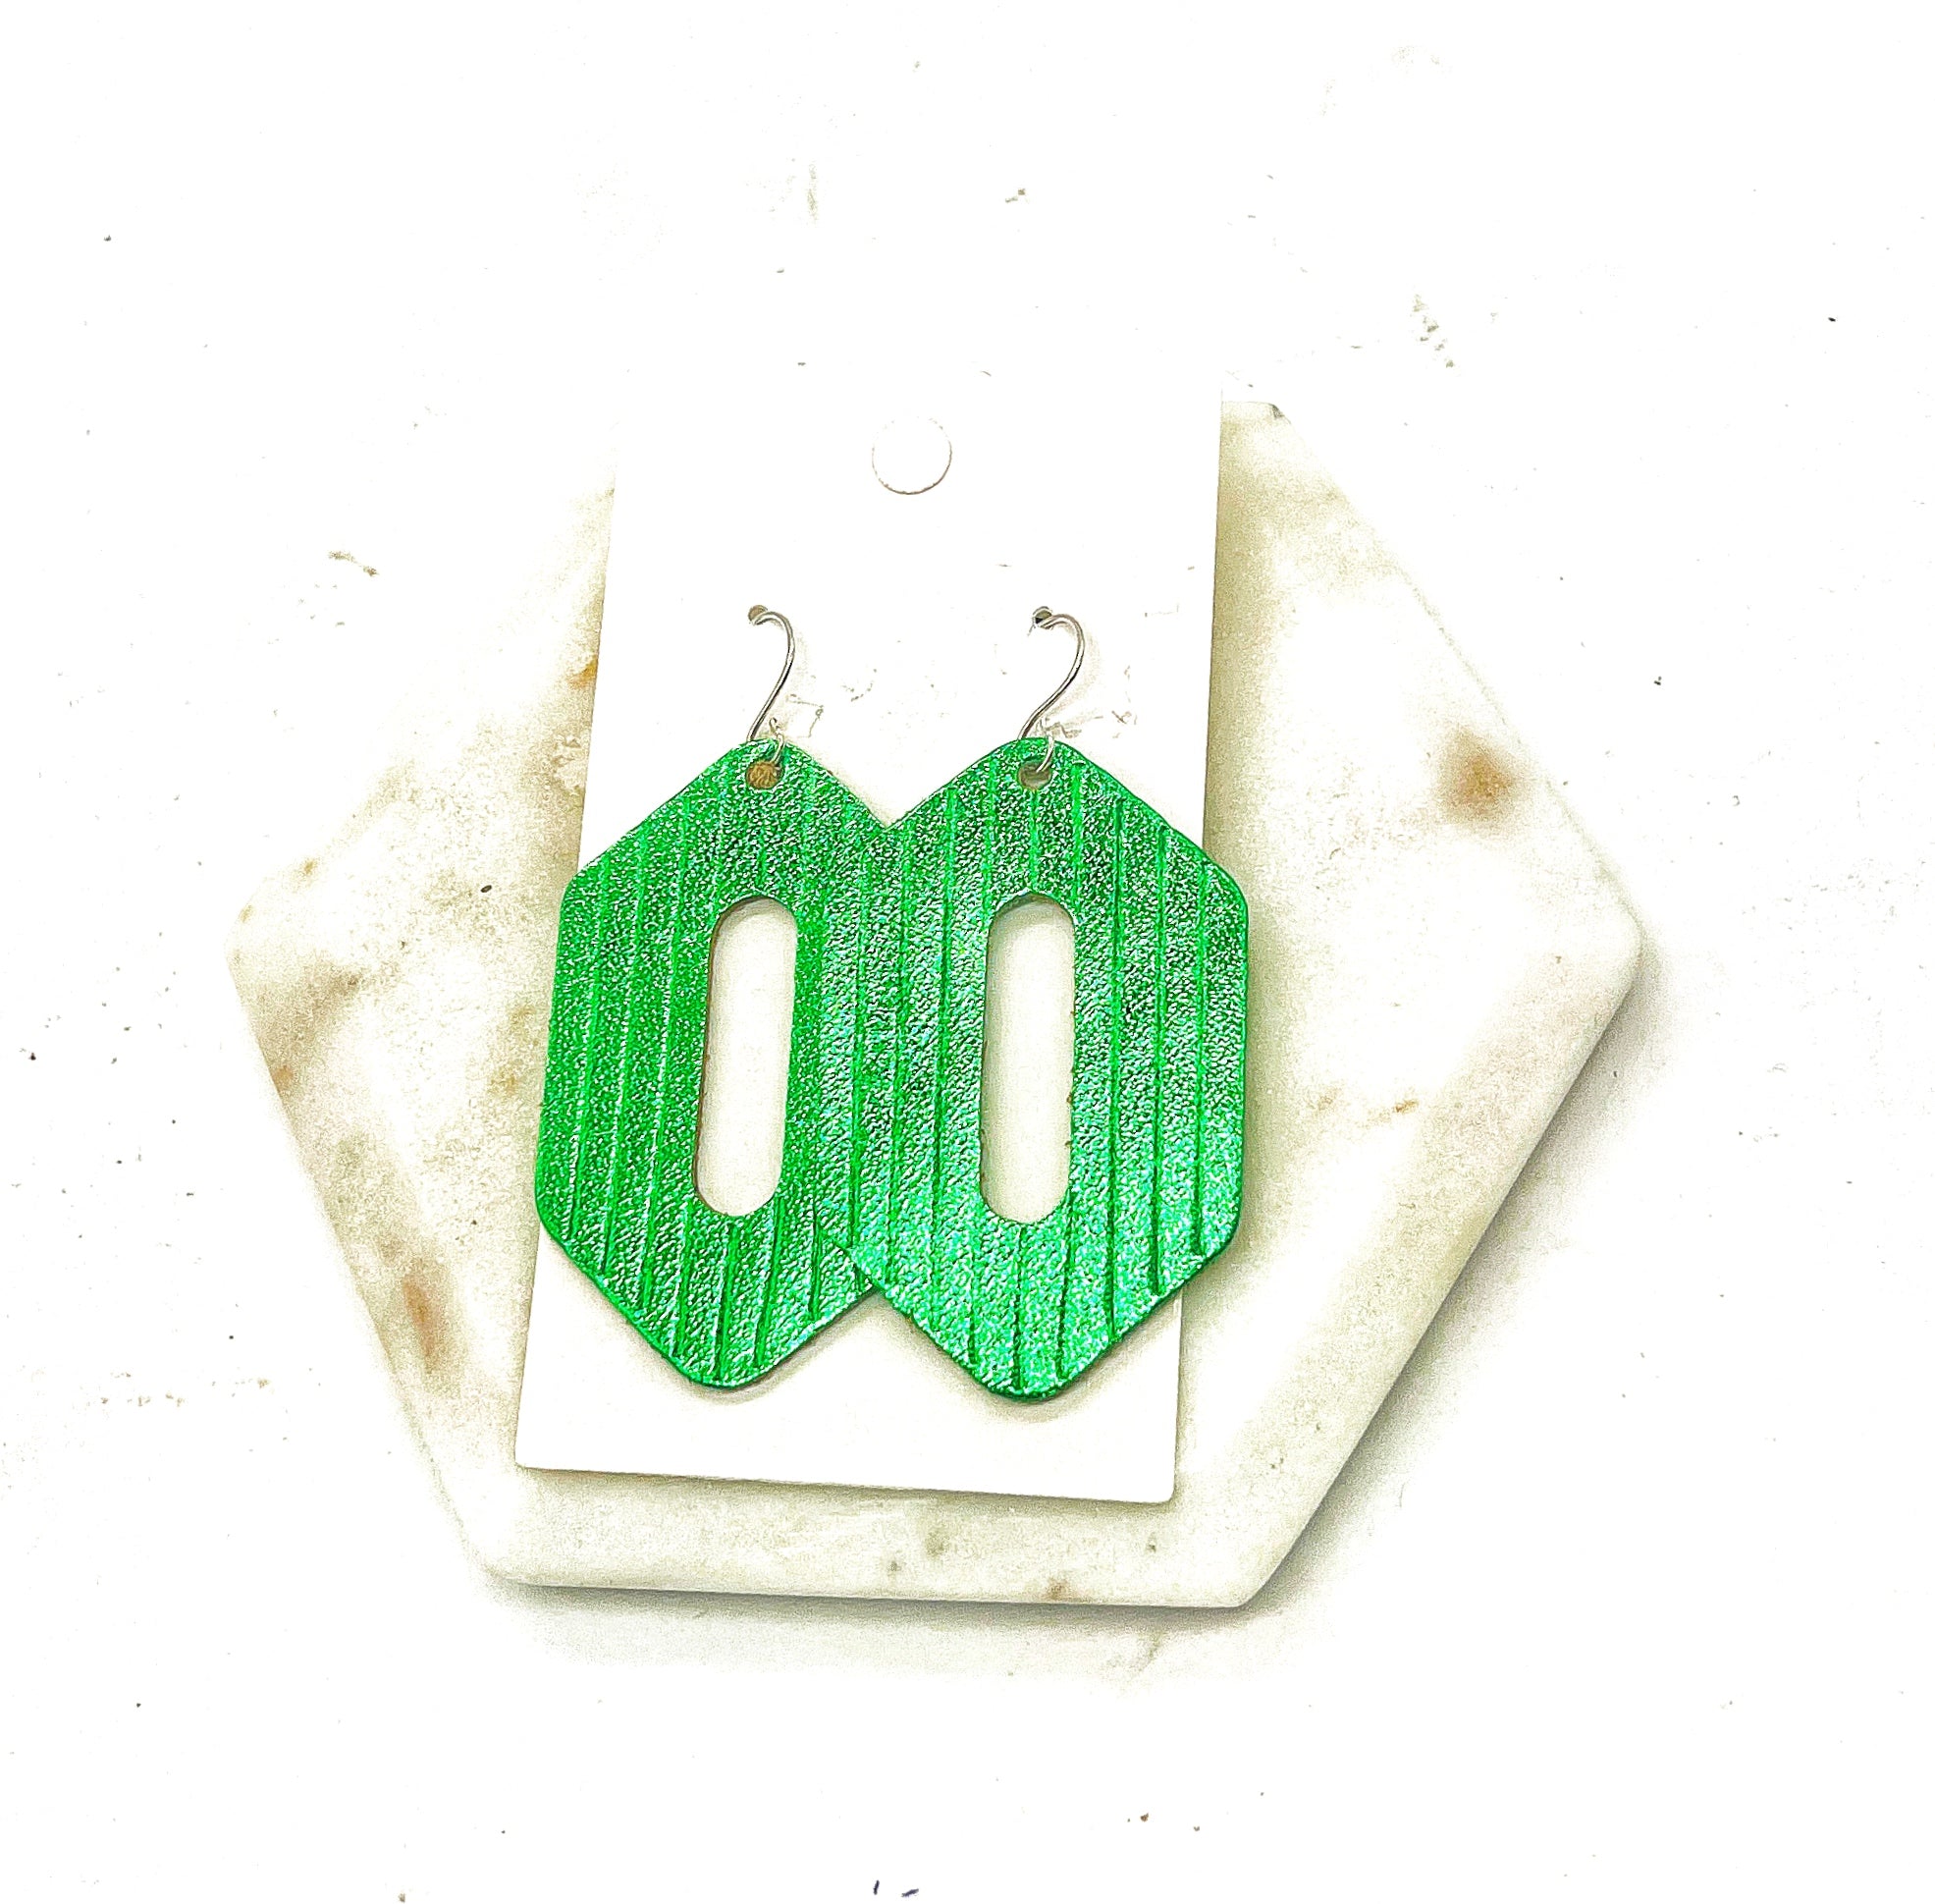 Green Leather Halle Earrings